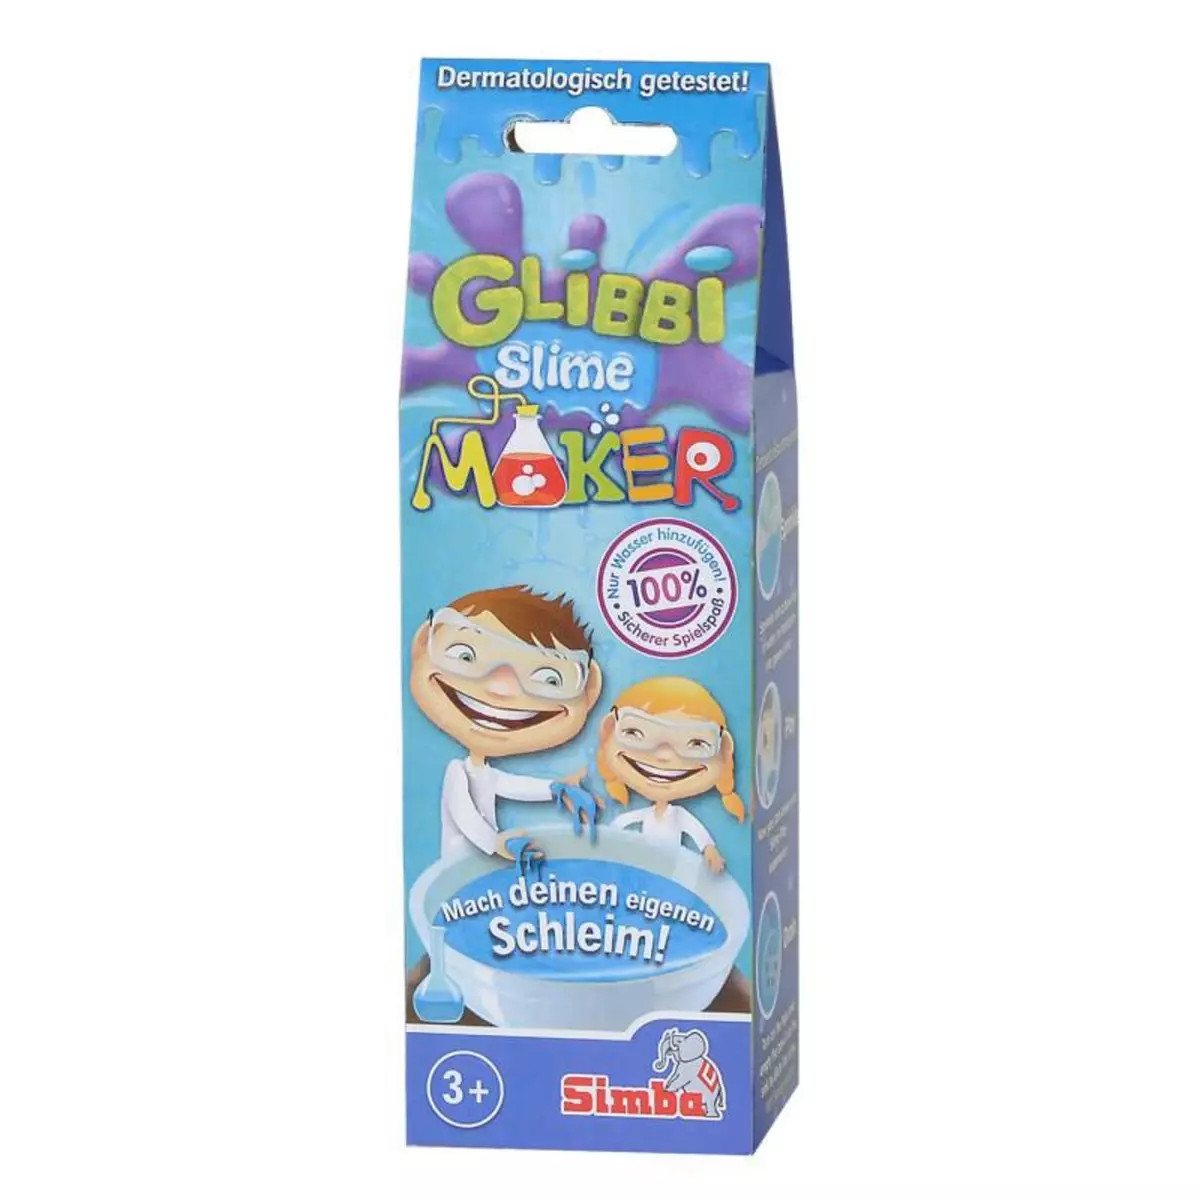 GLIBBI Glibbi Slime Maker